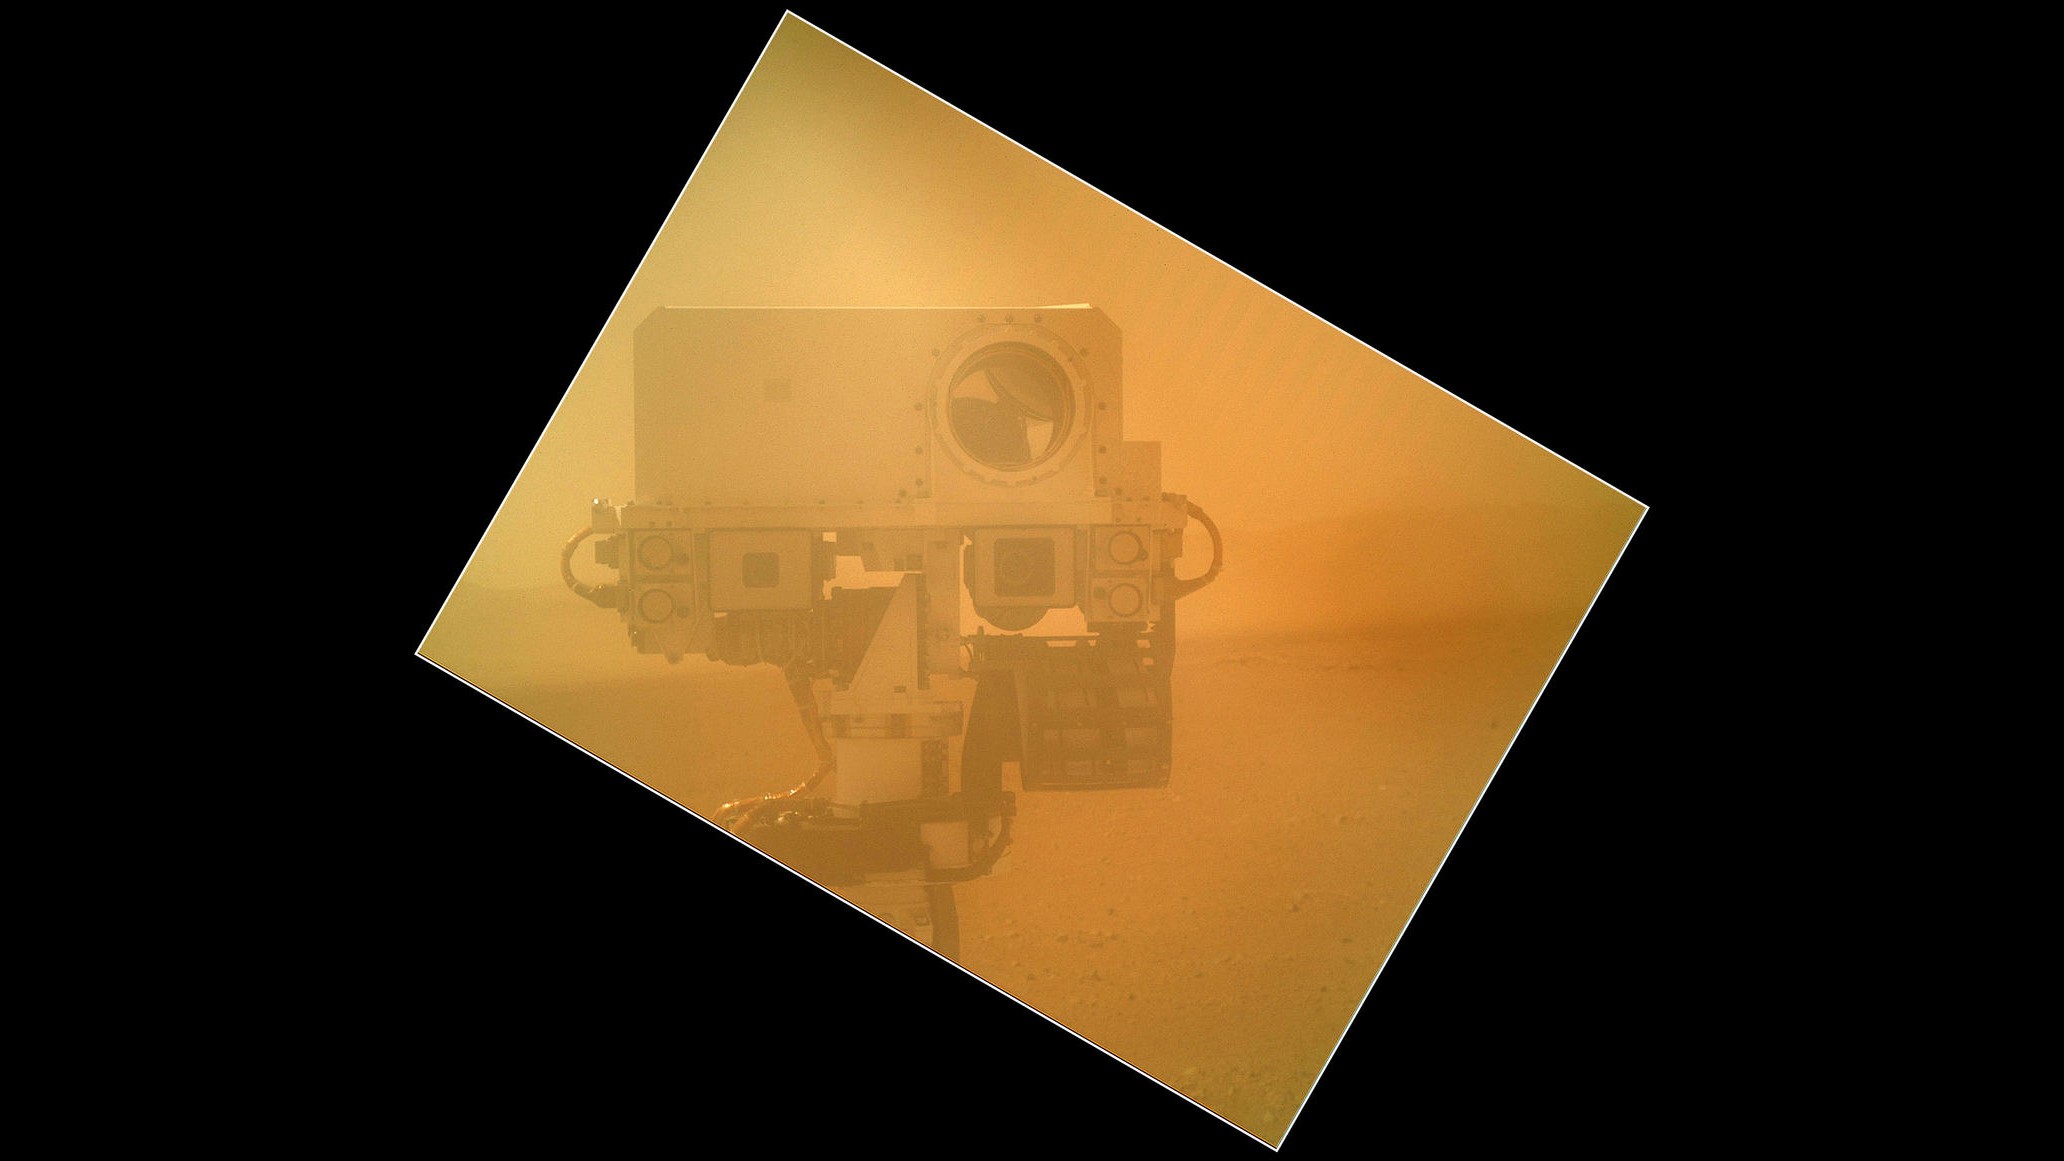 La parte superior del rover Curiosity se ha invertido